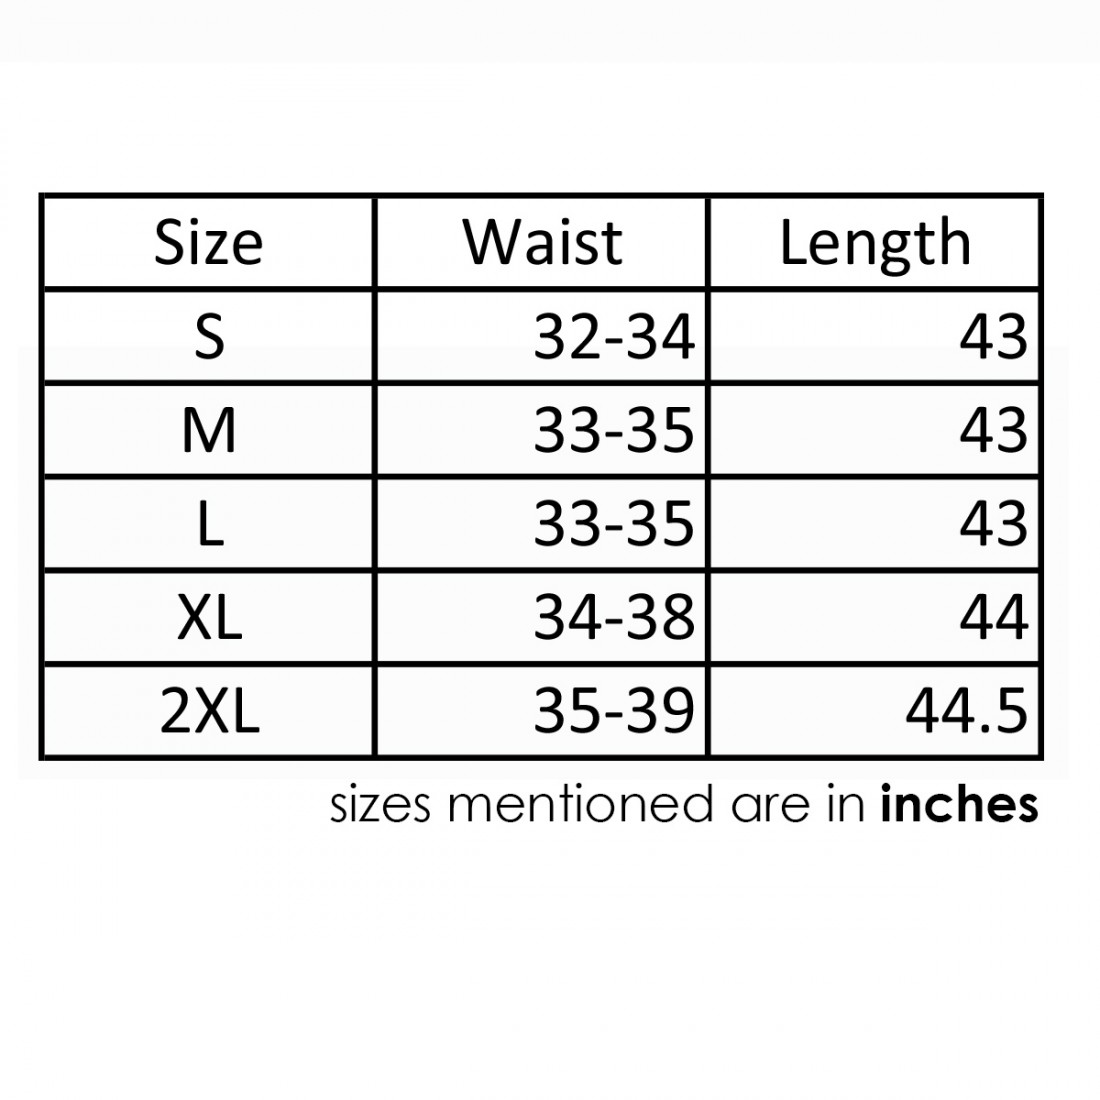 Bershka Jeans Size Chart